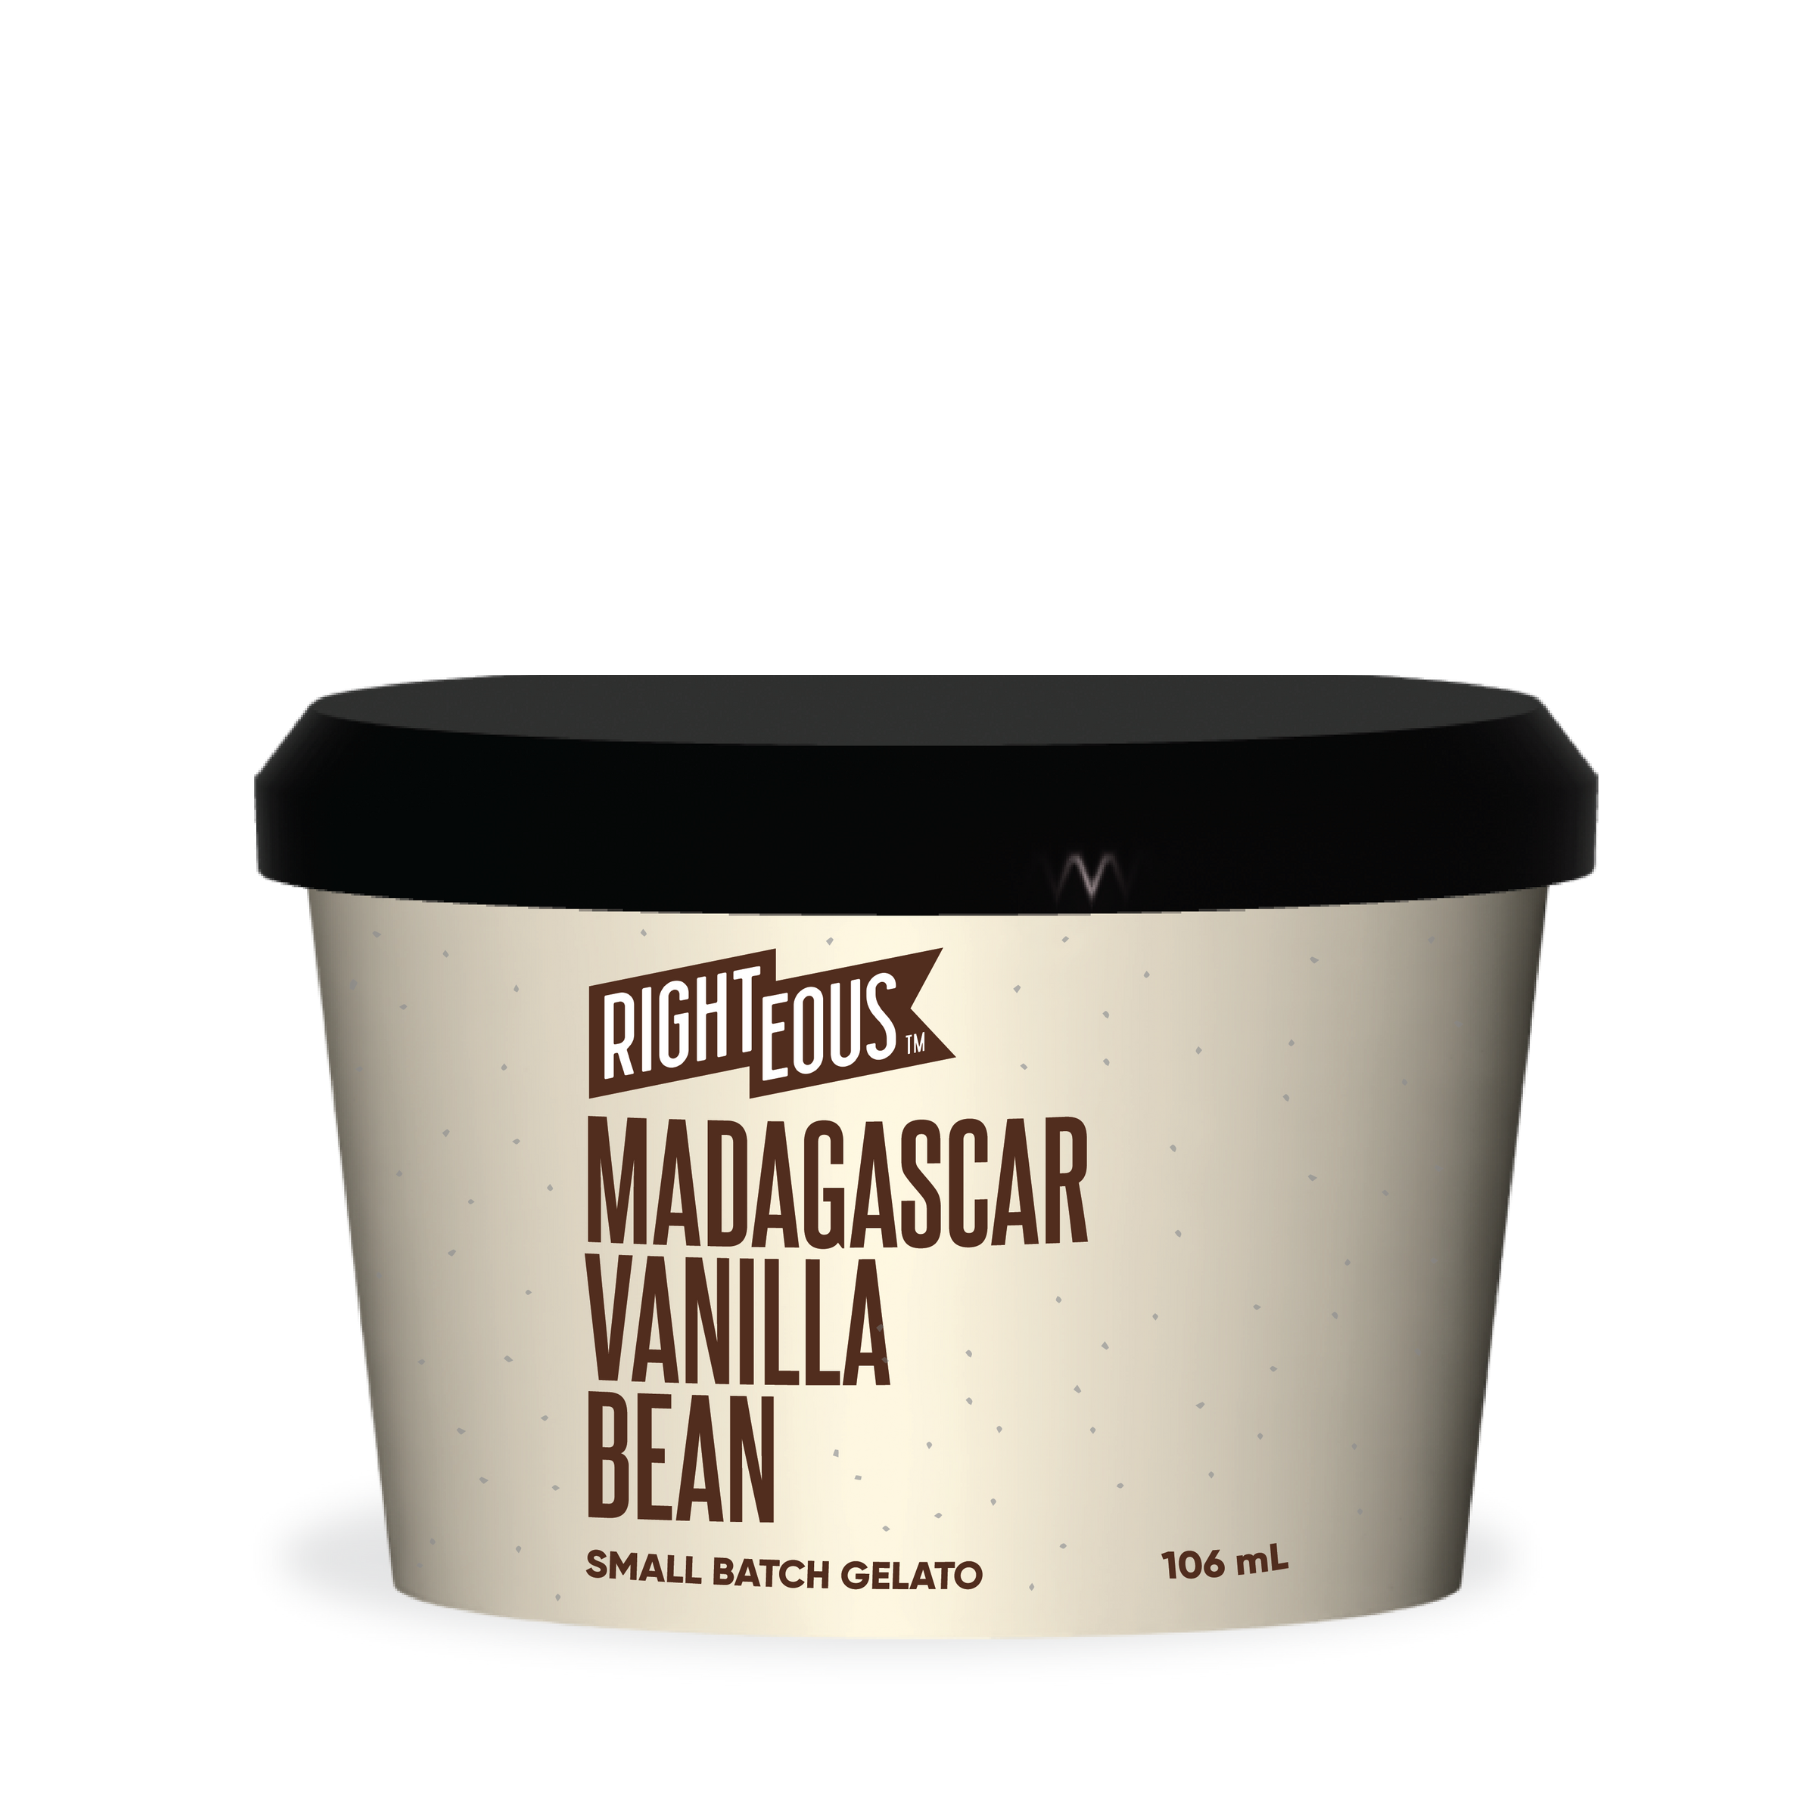 Madagascar Vanilla Bean Minis